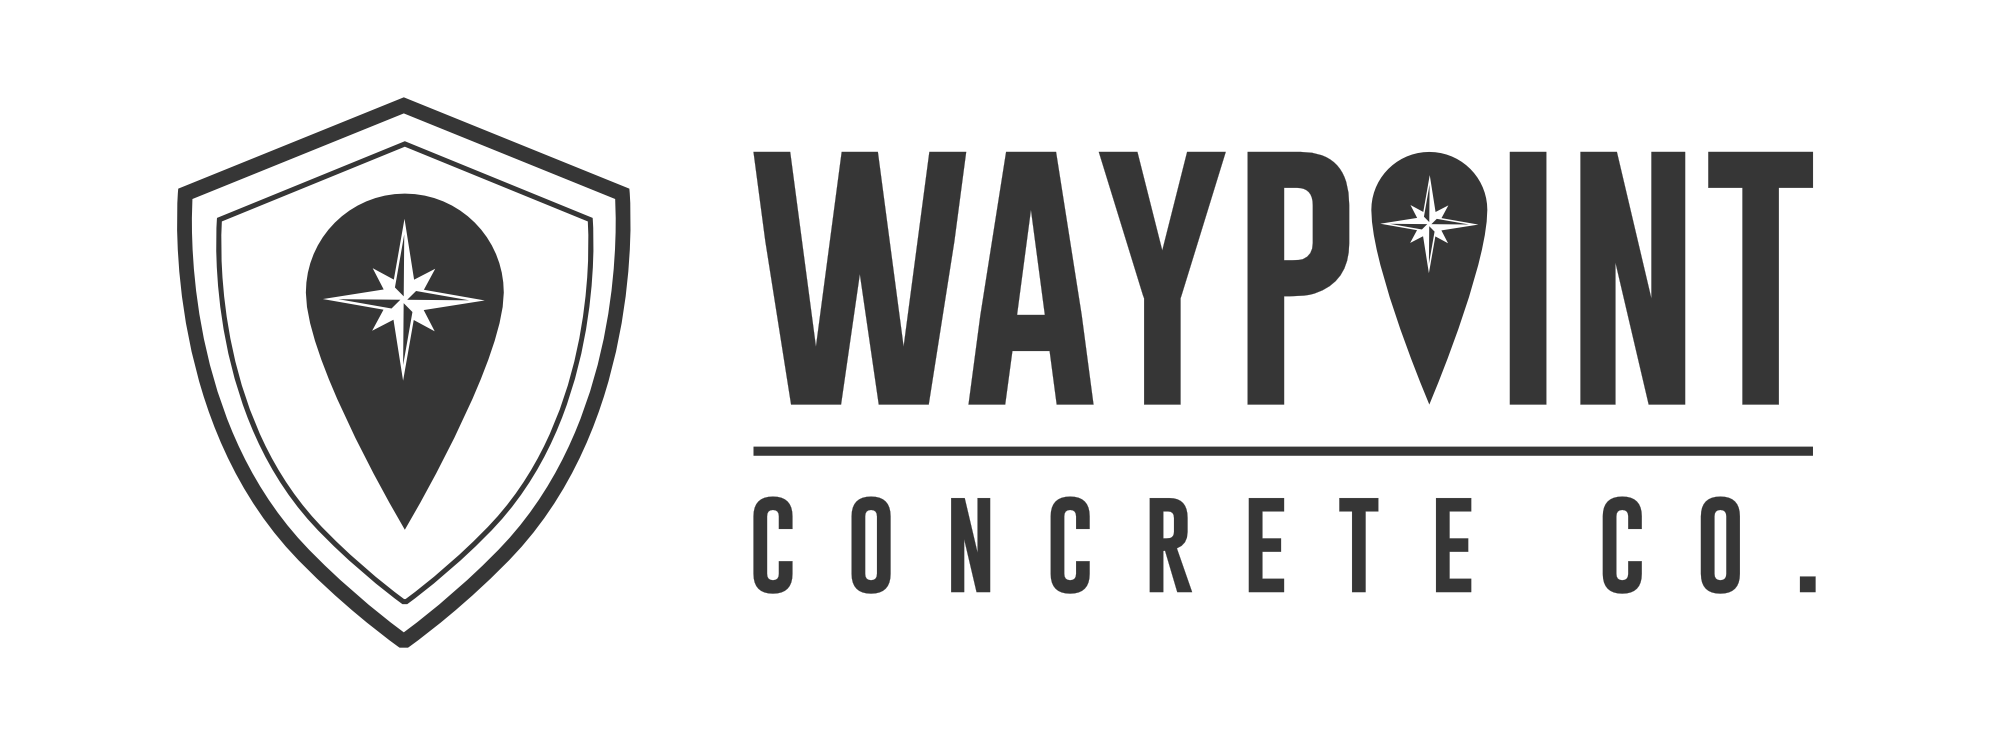 Waypoint Concrete Co.